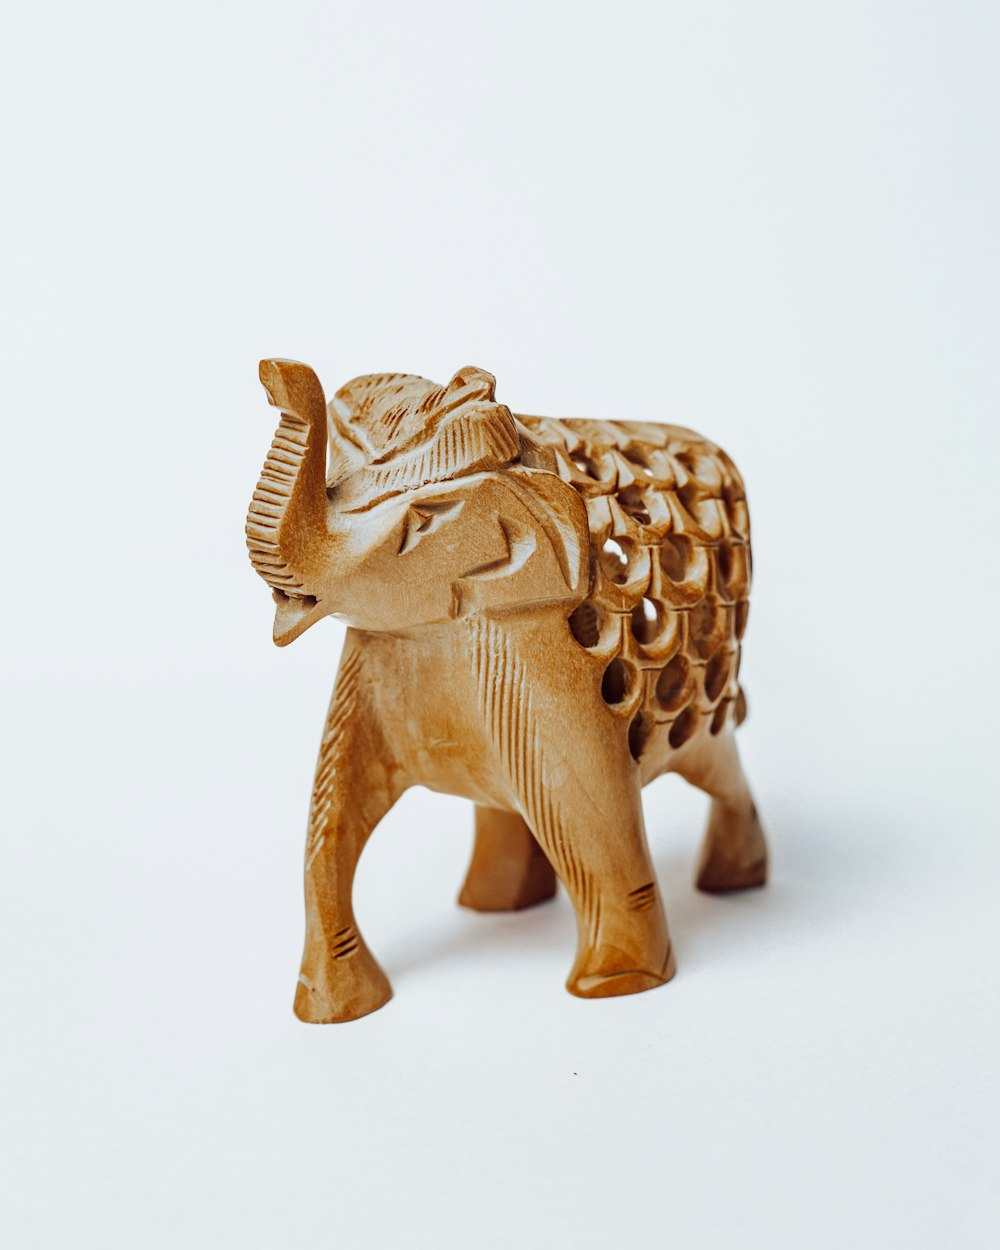 gold elephant figurine on white surface